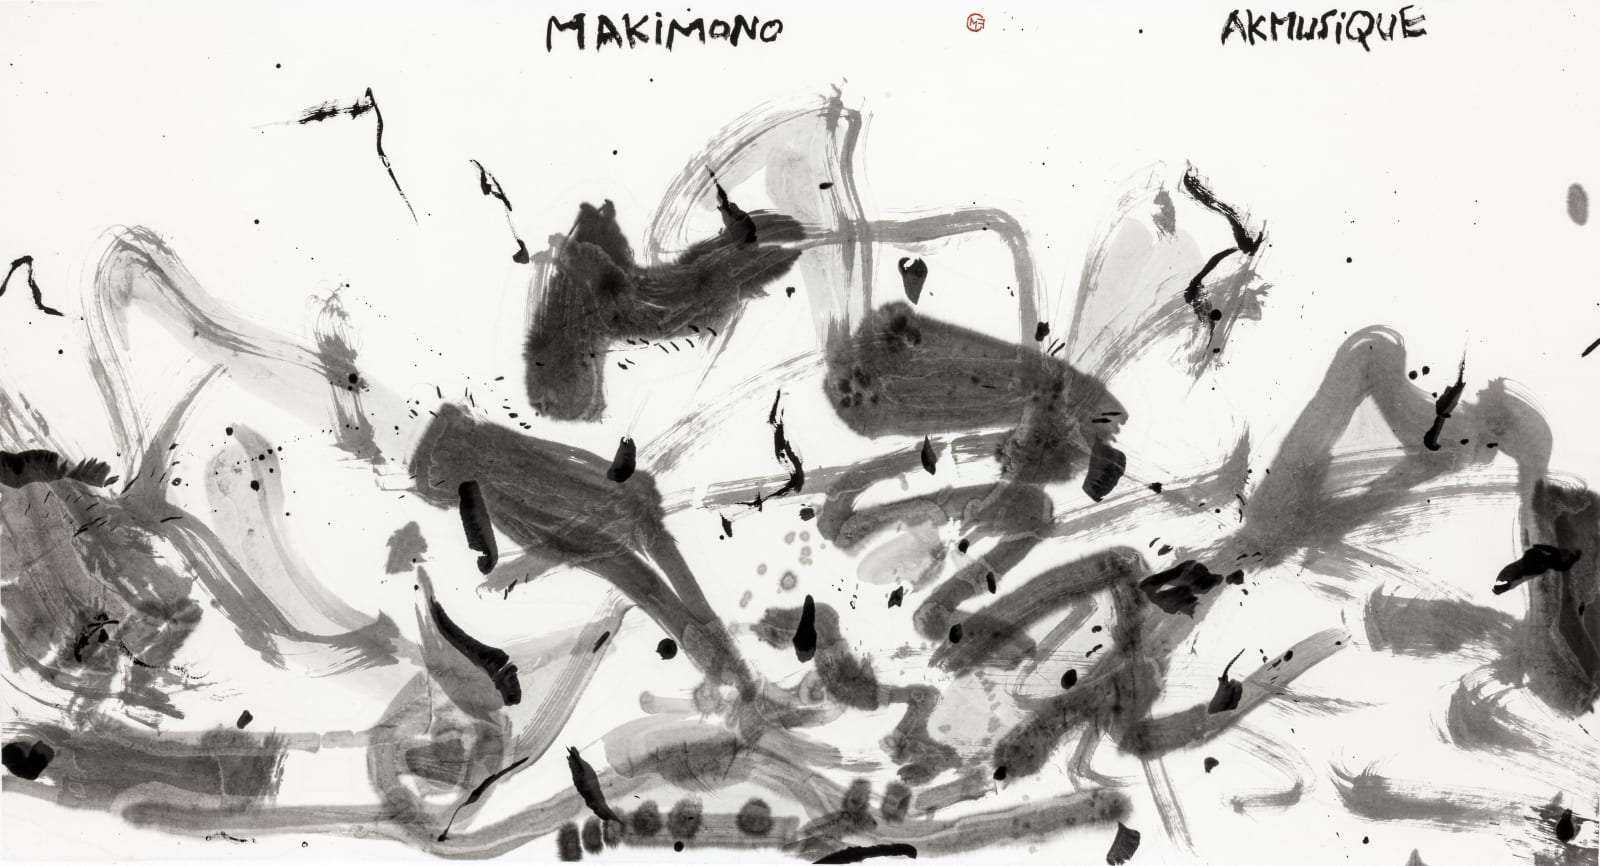 Fung Ming Chip Ak Musique / Makimono, 2019